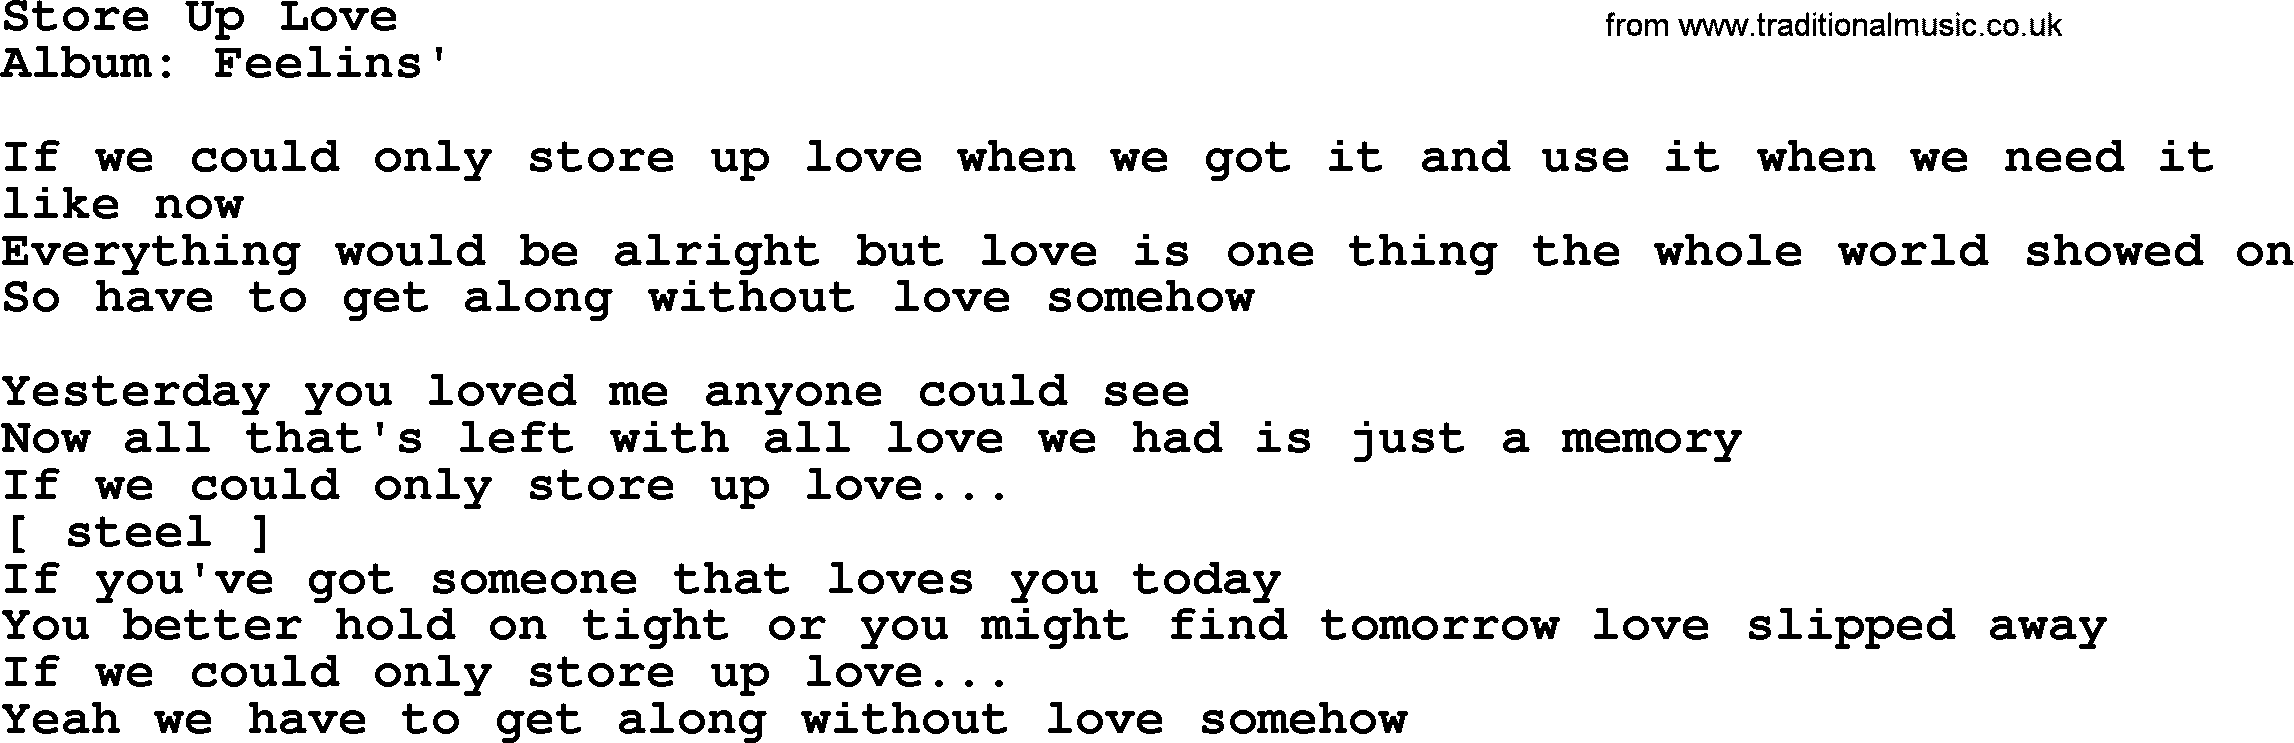 Loretta Lynn song: Store Up Love lyrics